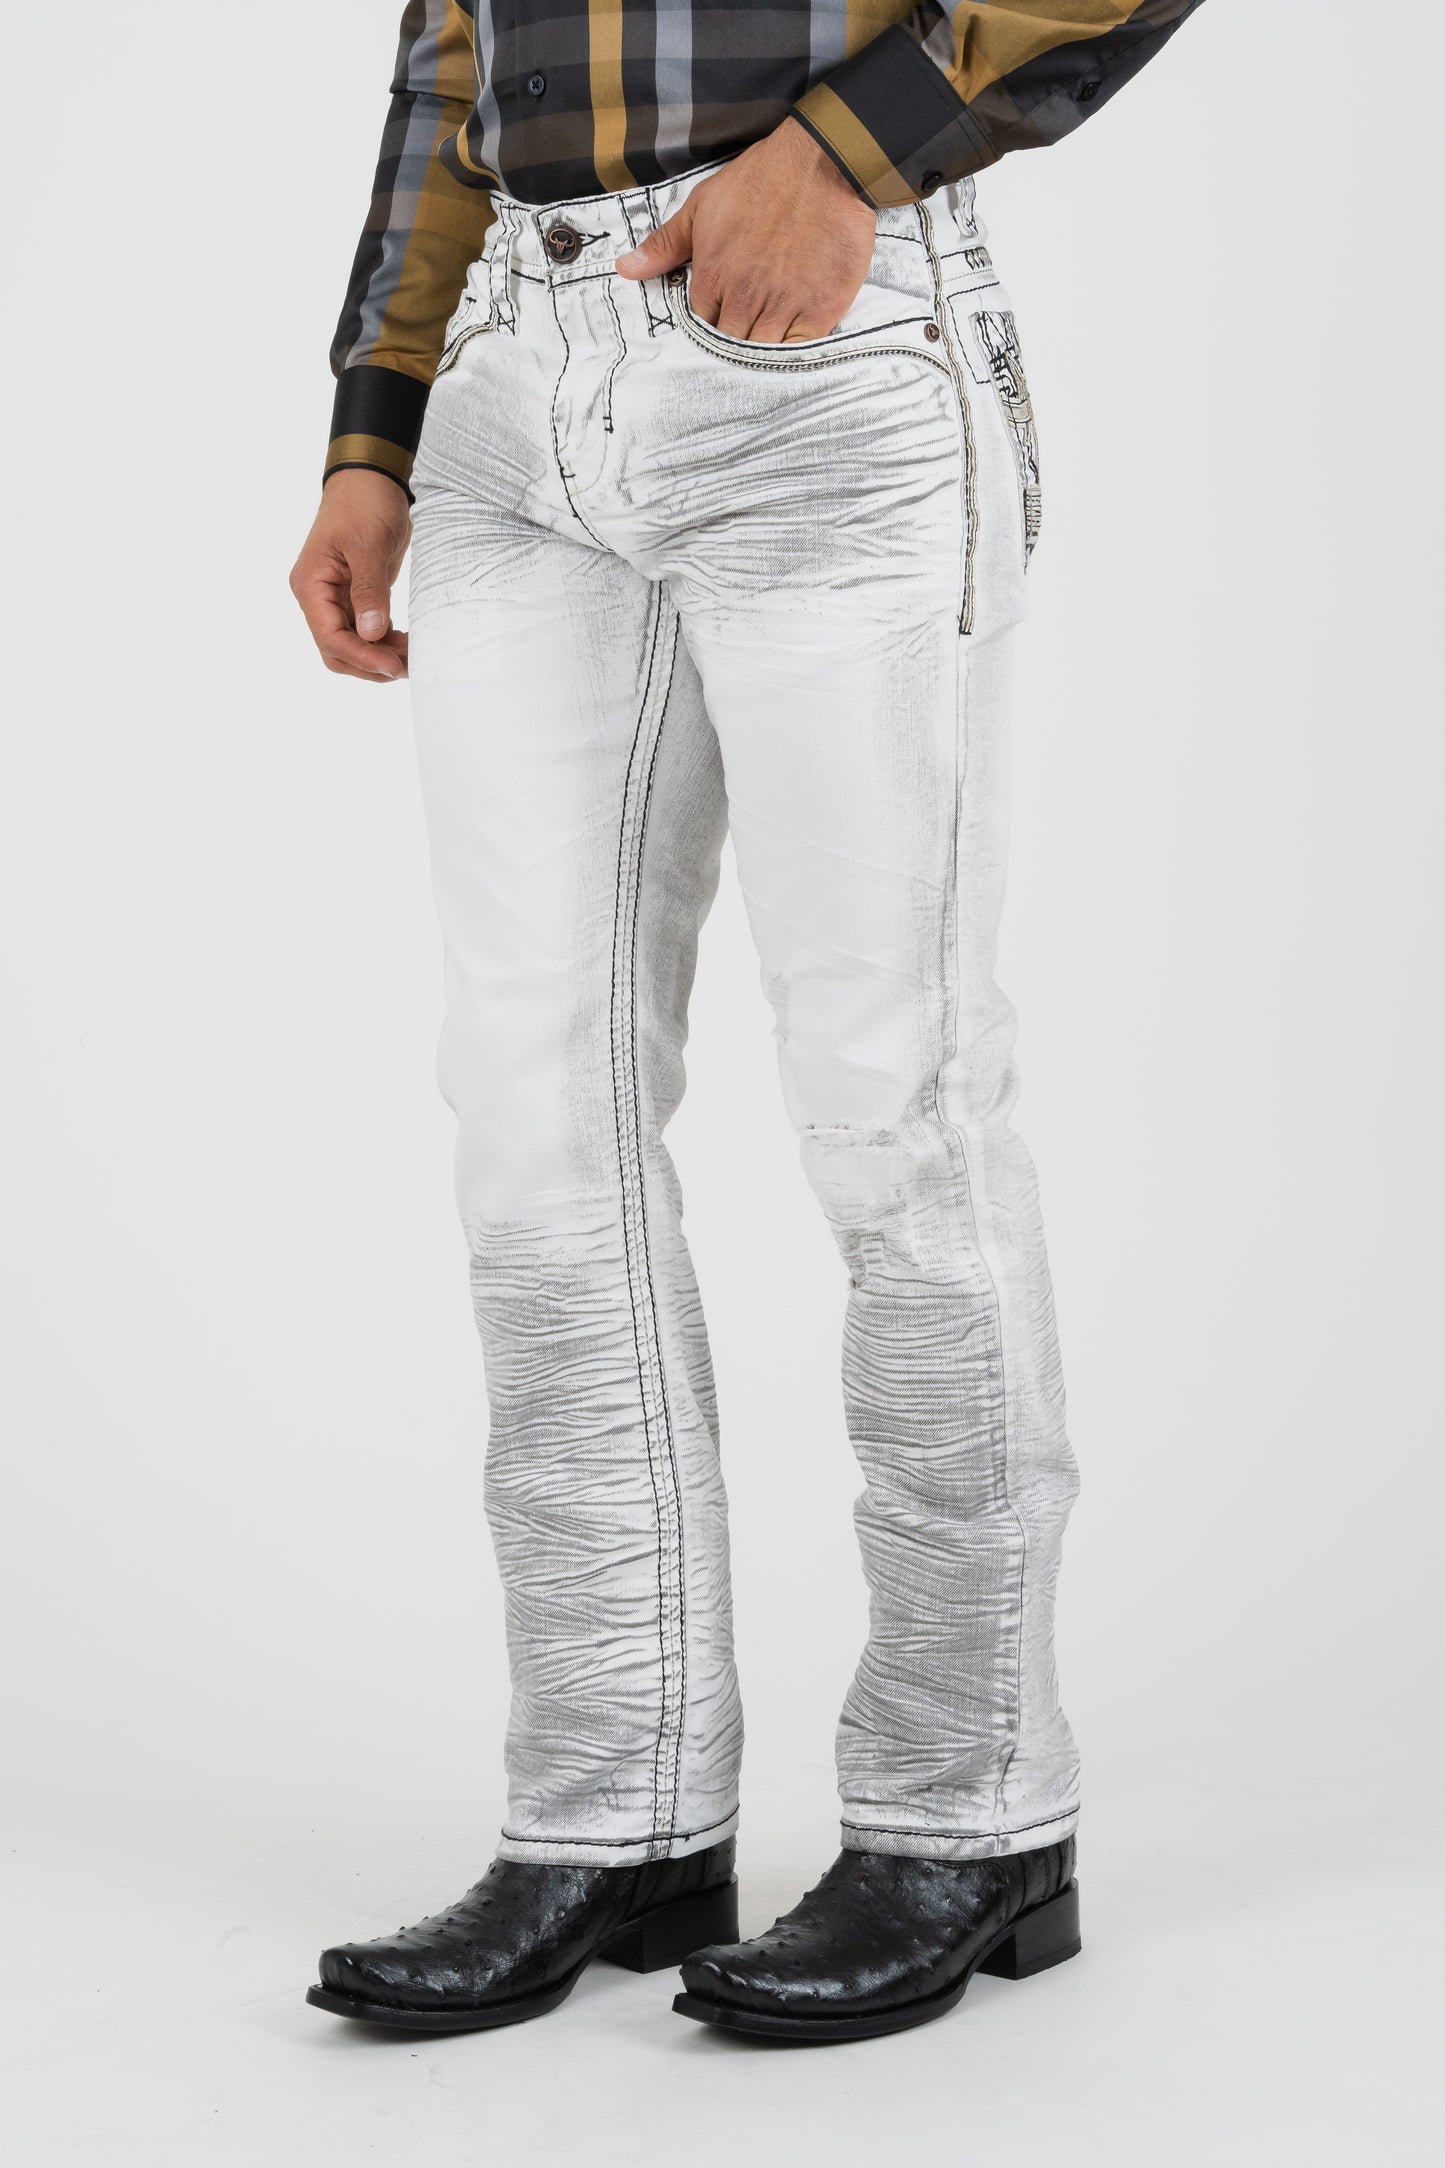 Holt Men's White Slim Boot Cut Jeans